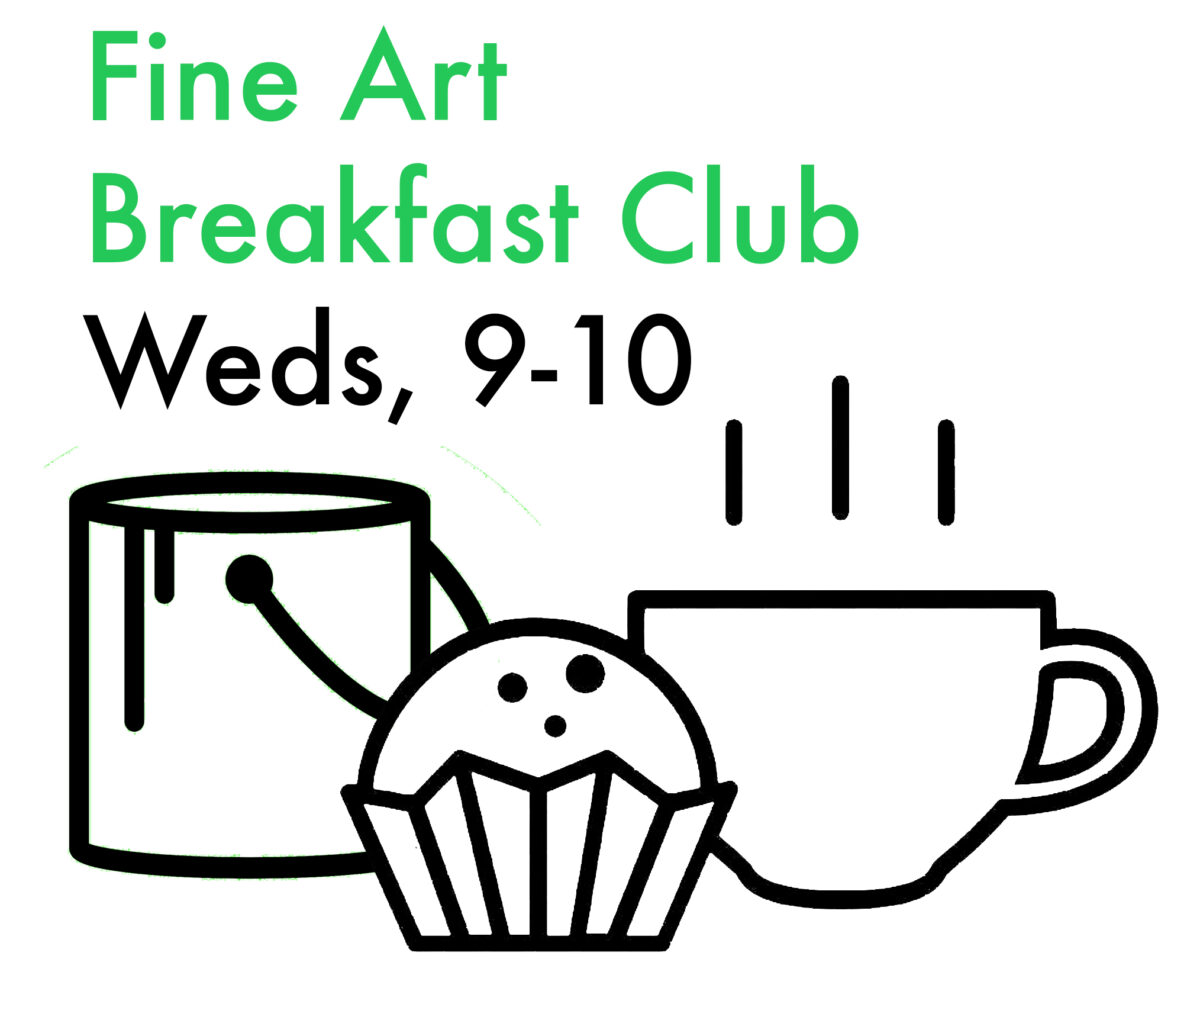 Fine Art Breakfast Club